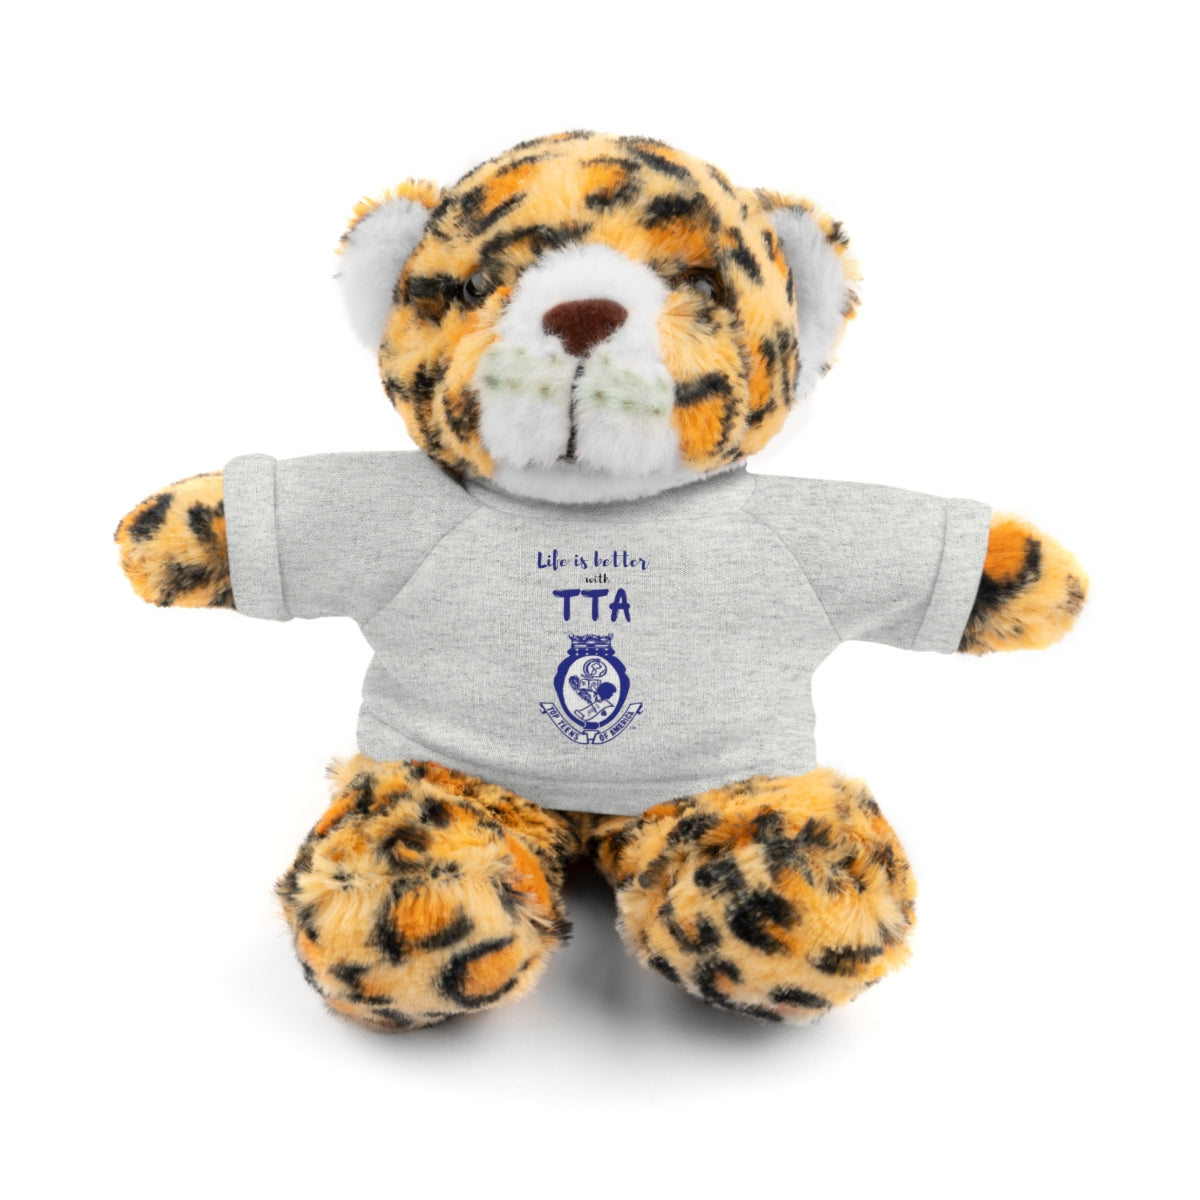 TTA (Life Is Better) Stuffed Animals with Tee